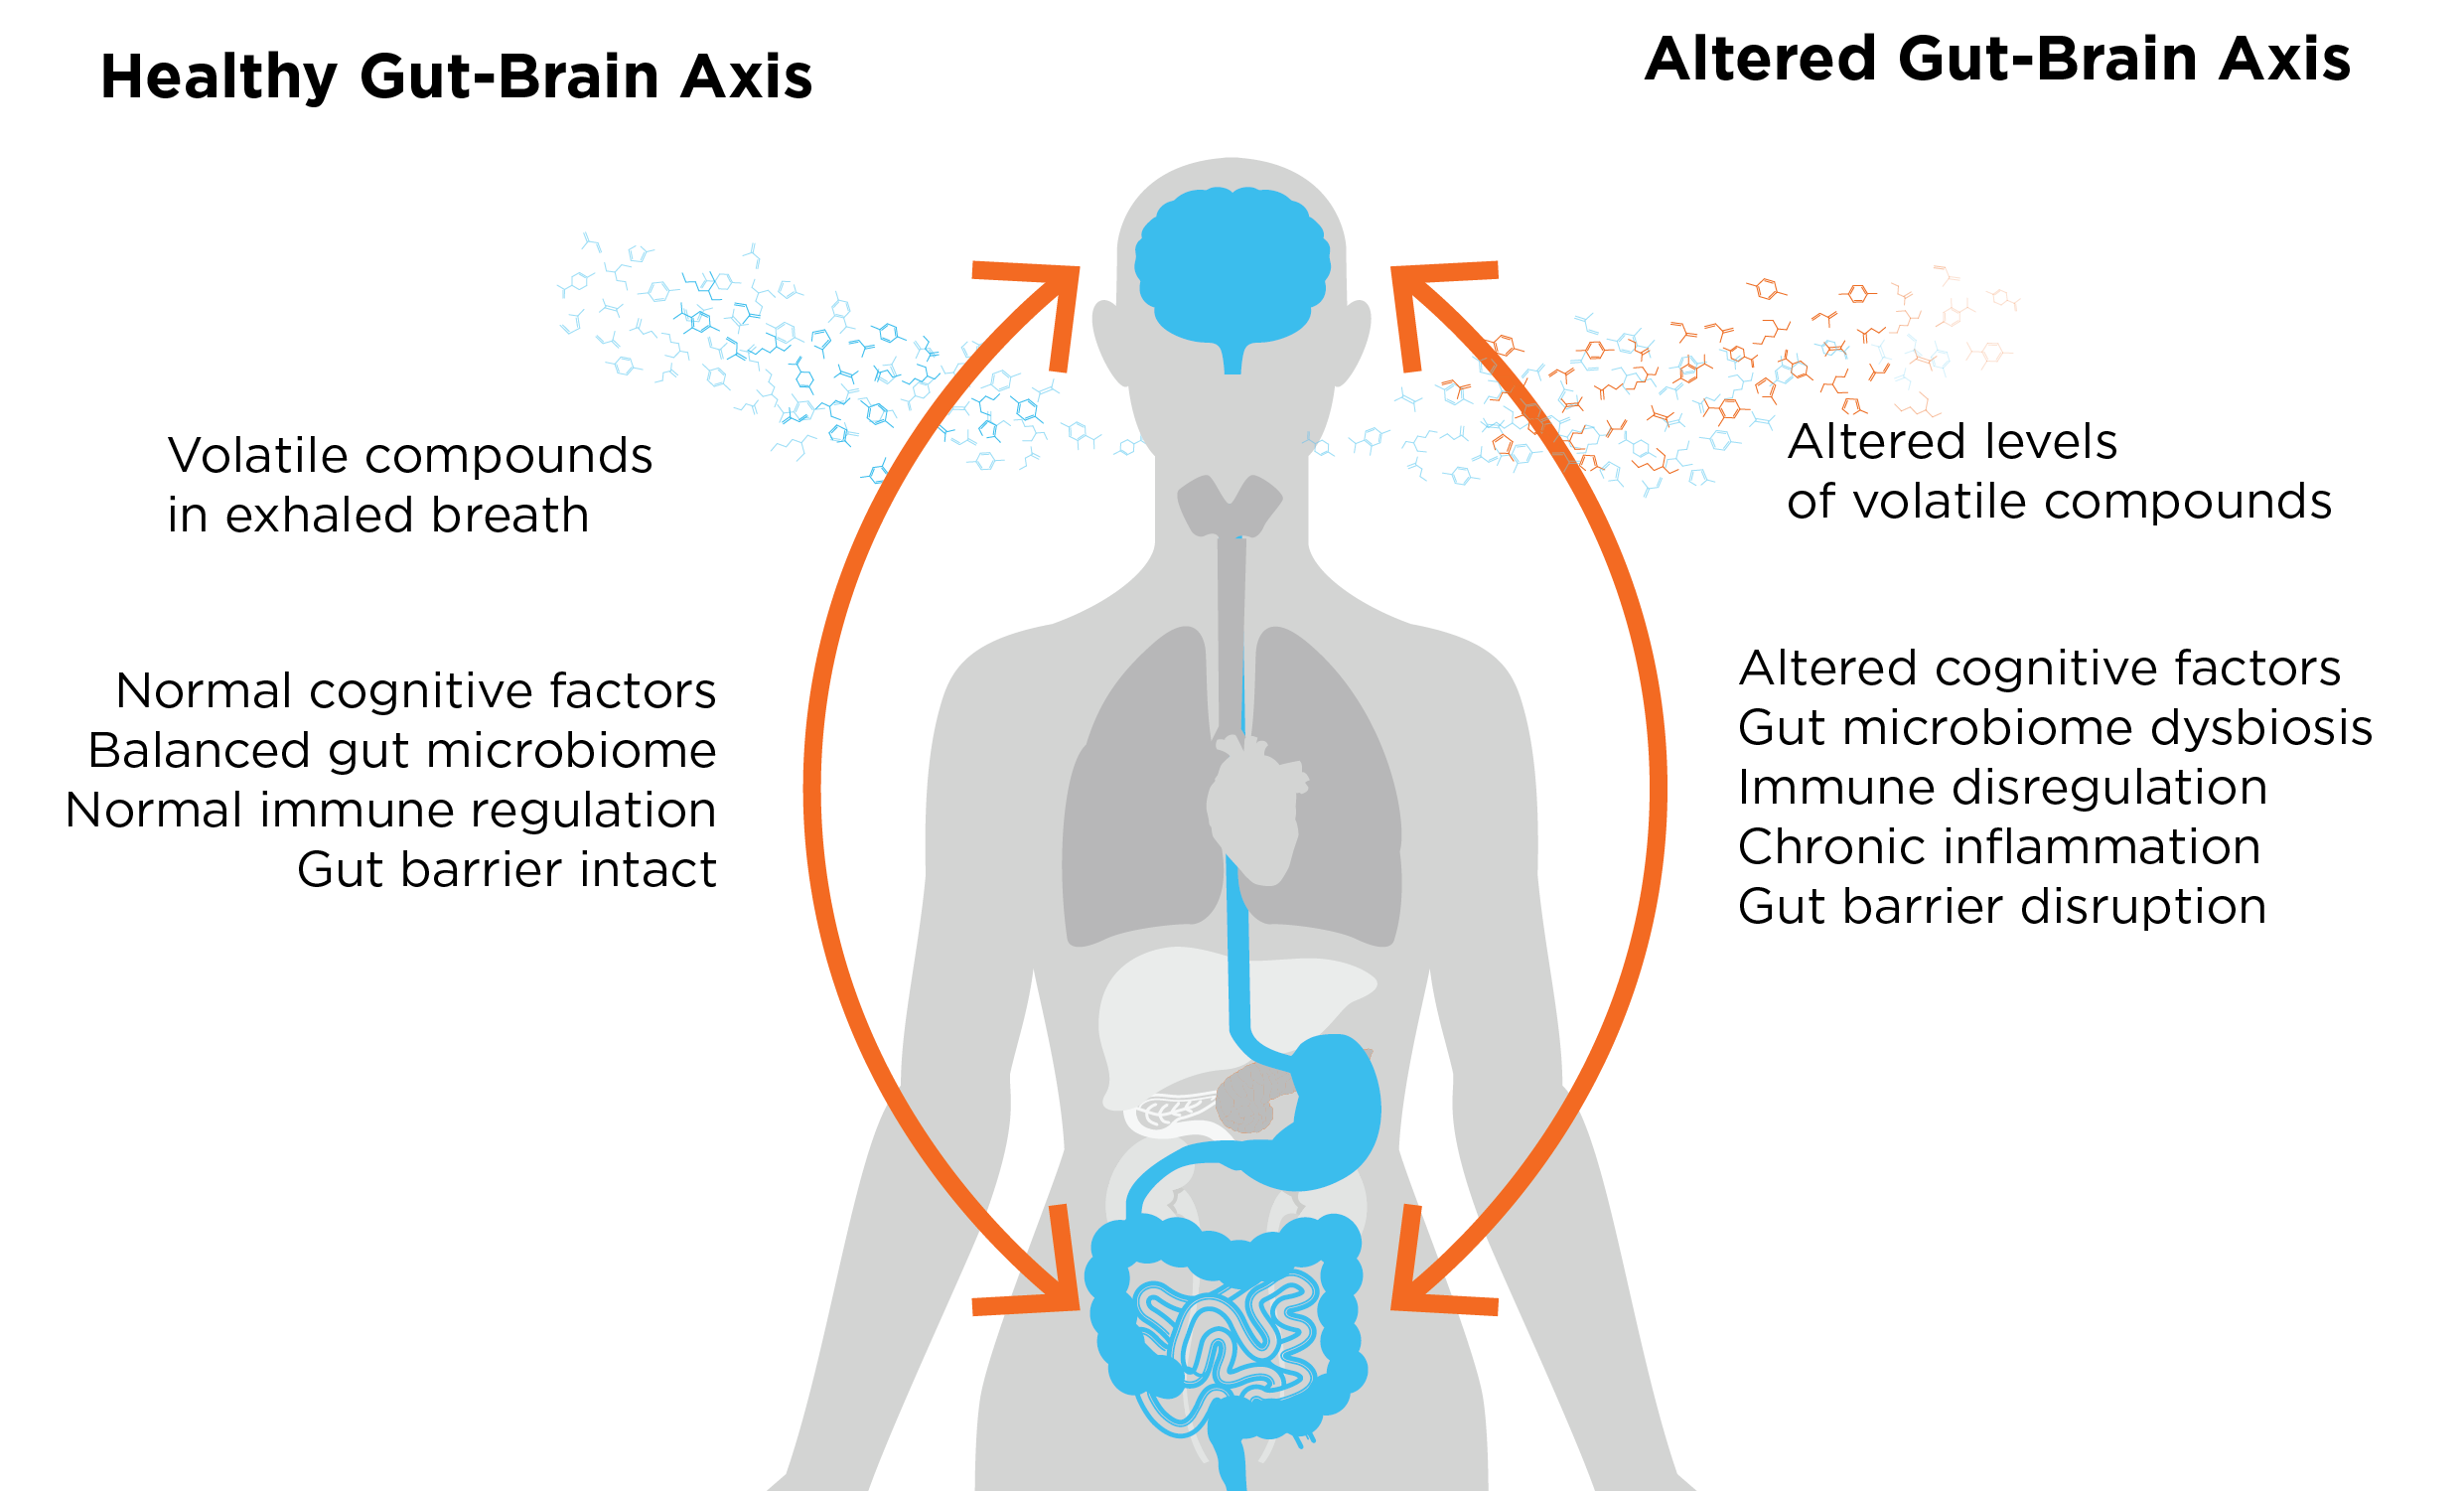 Gut-brain axis figure 1